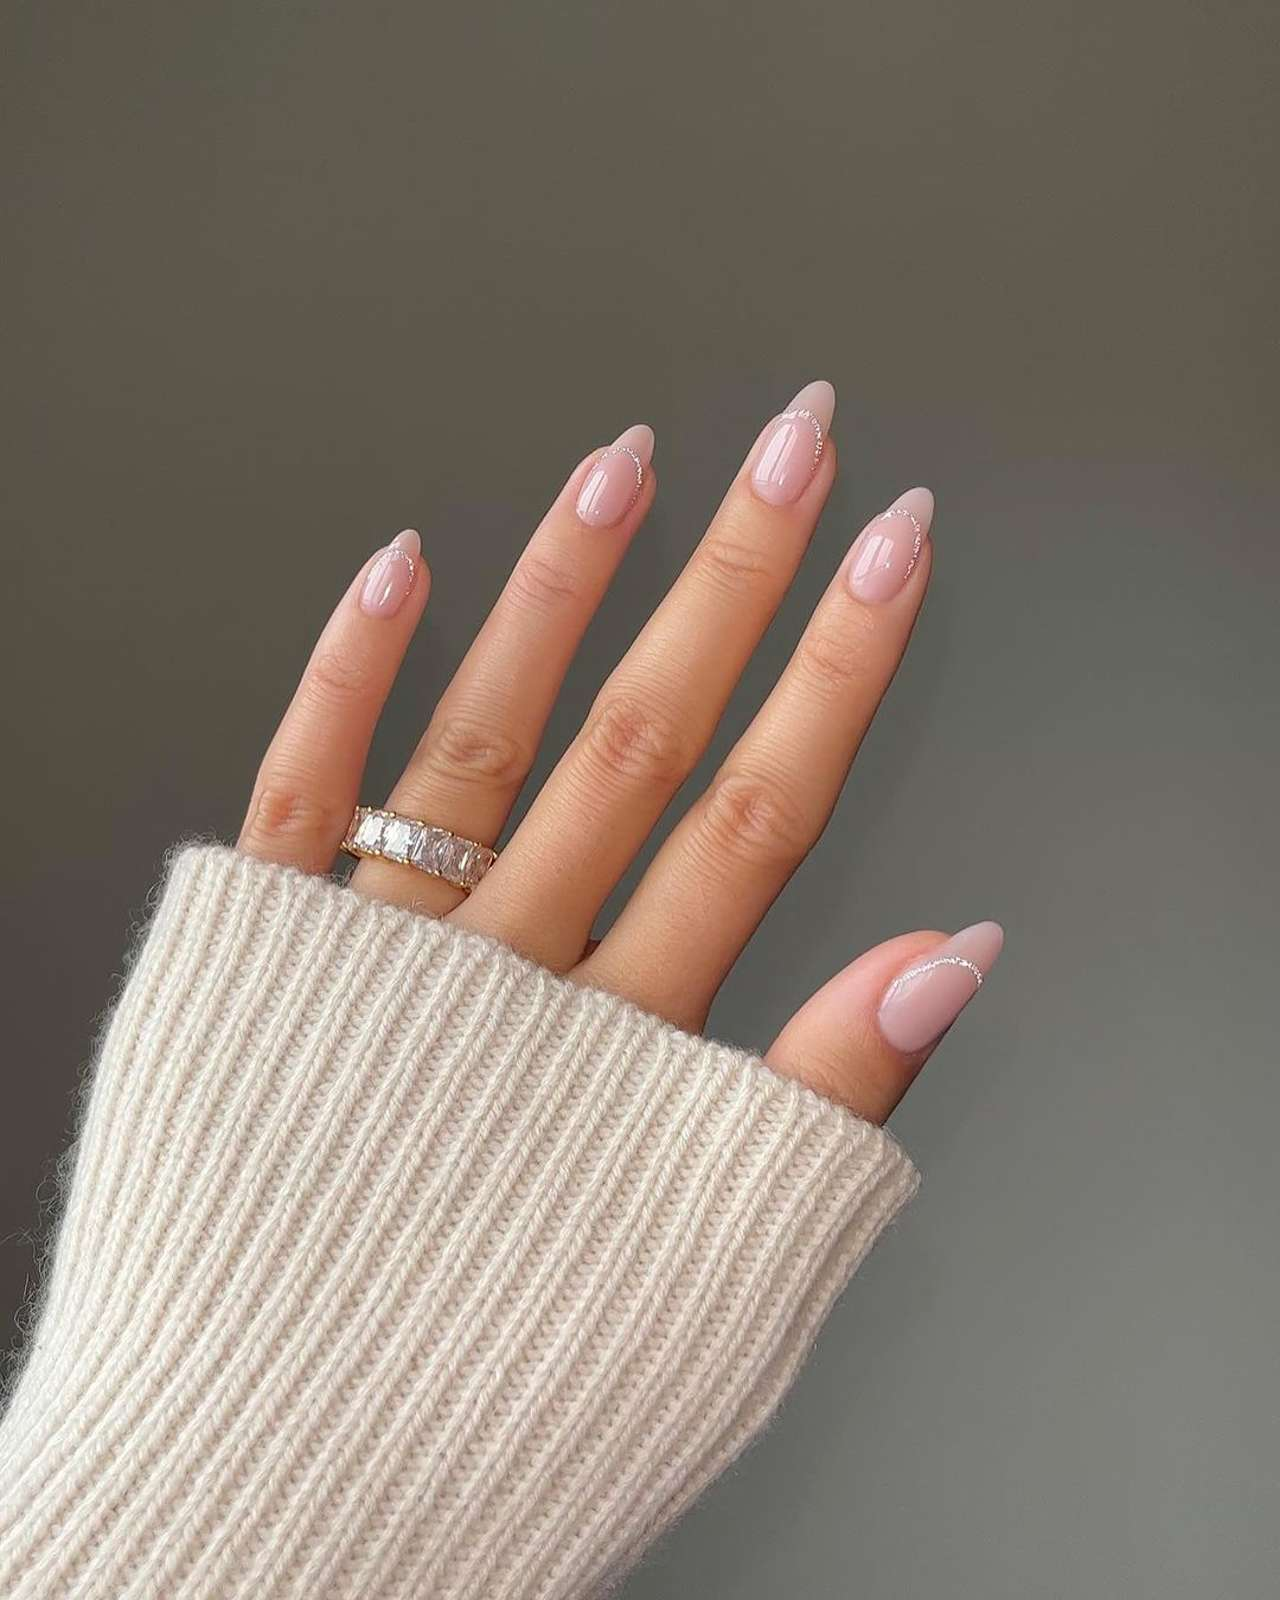 15 uñas permanentes bonitas para inspirarte